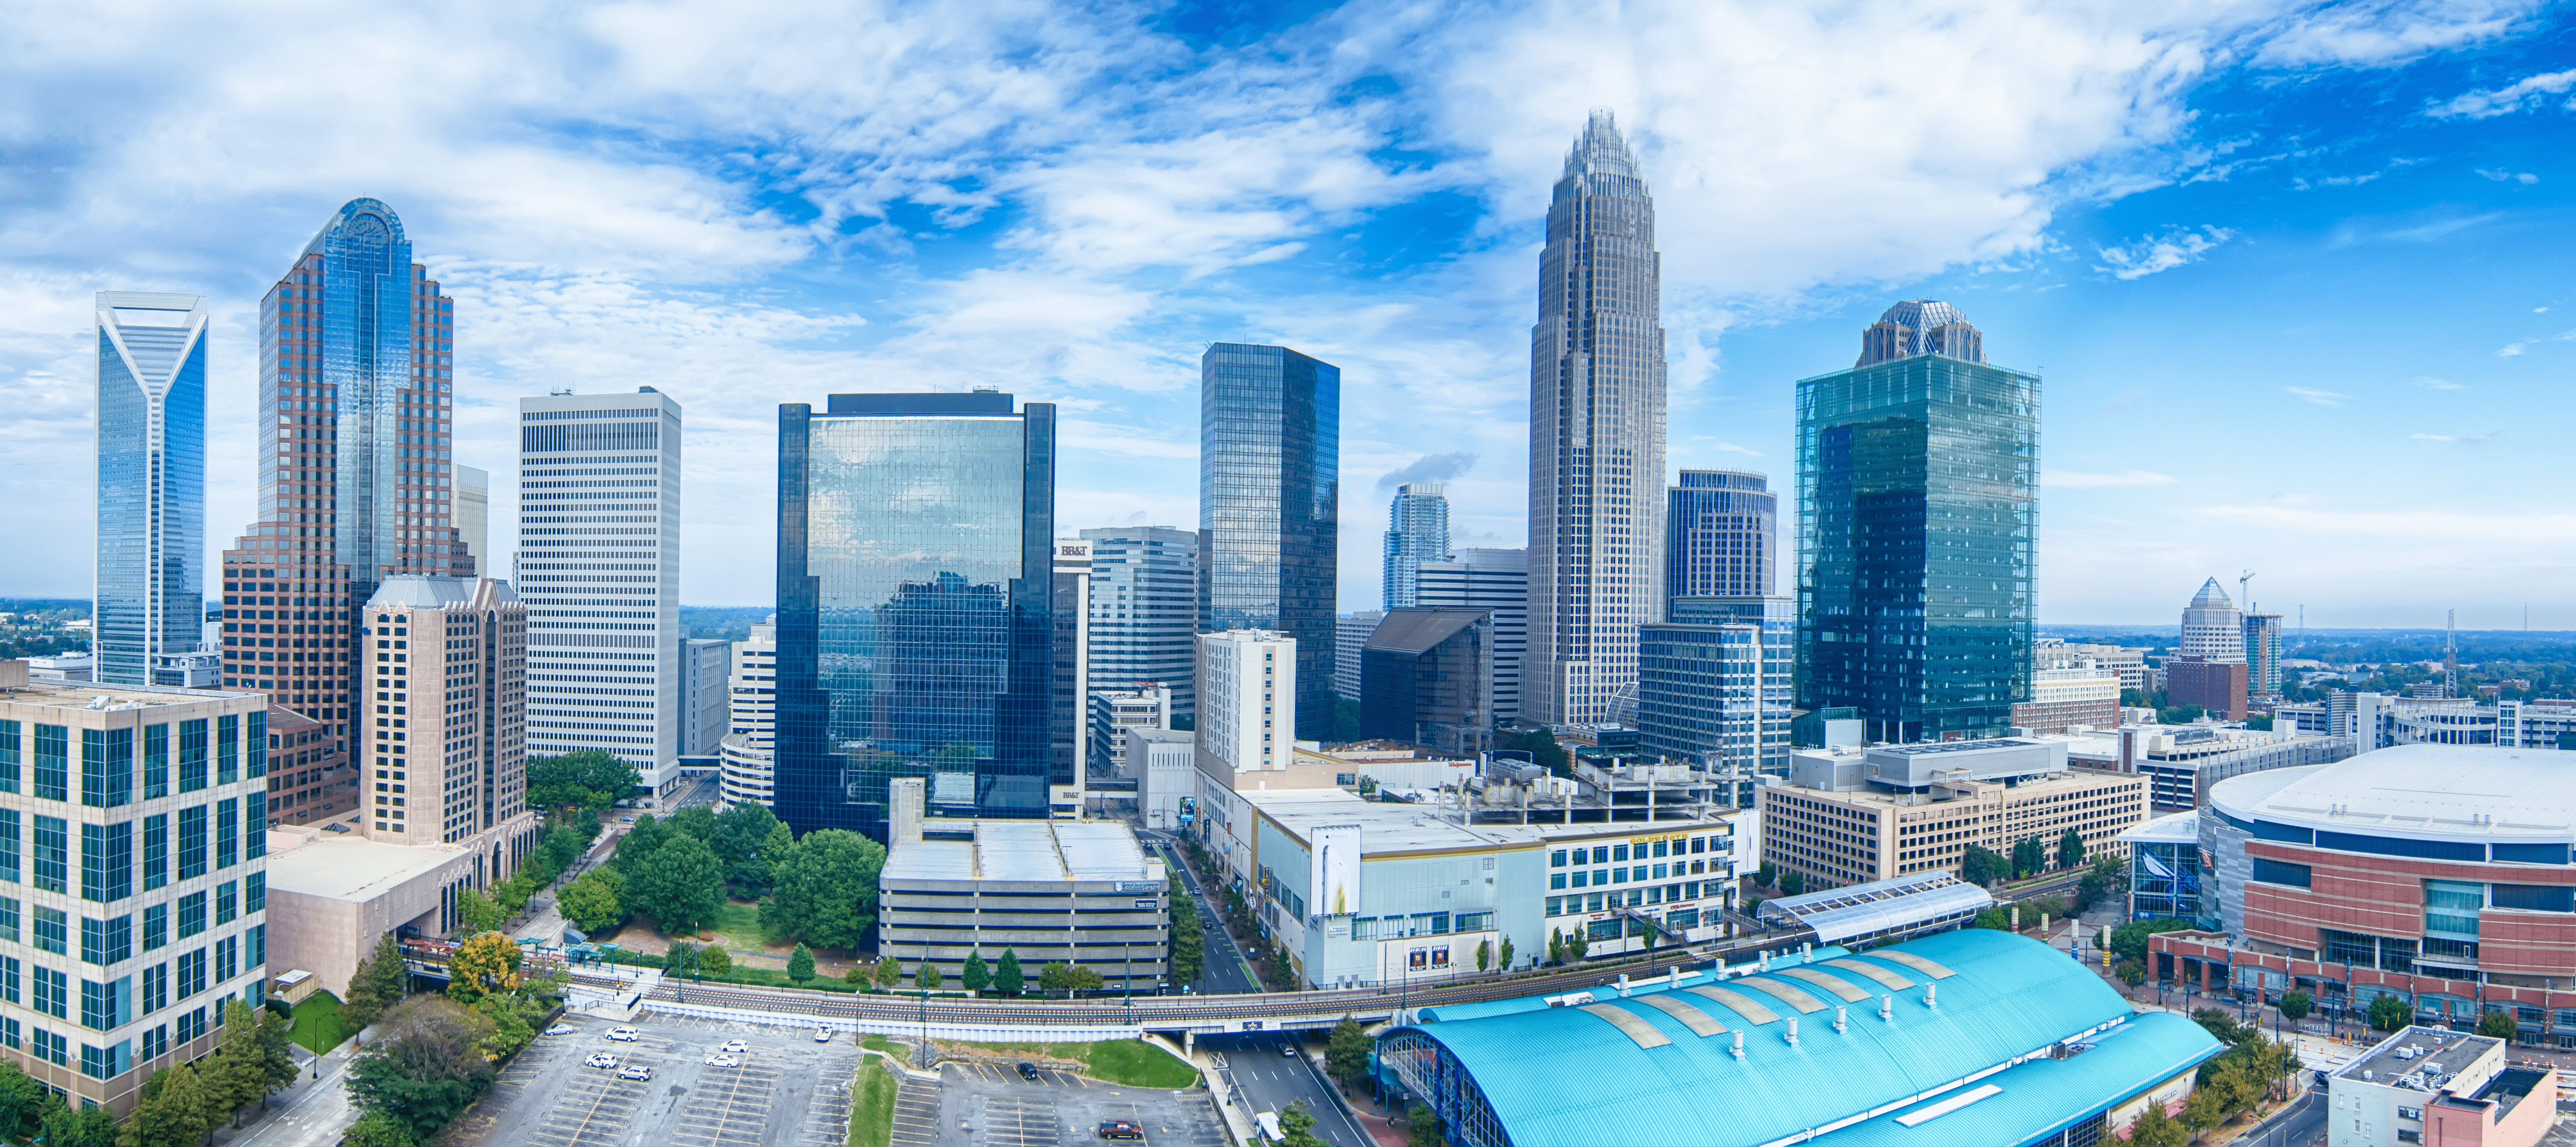 Charlotte North Carolina skyline on a sunny day